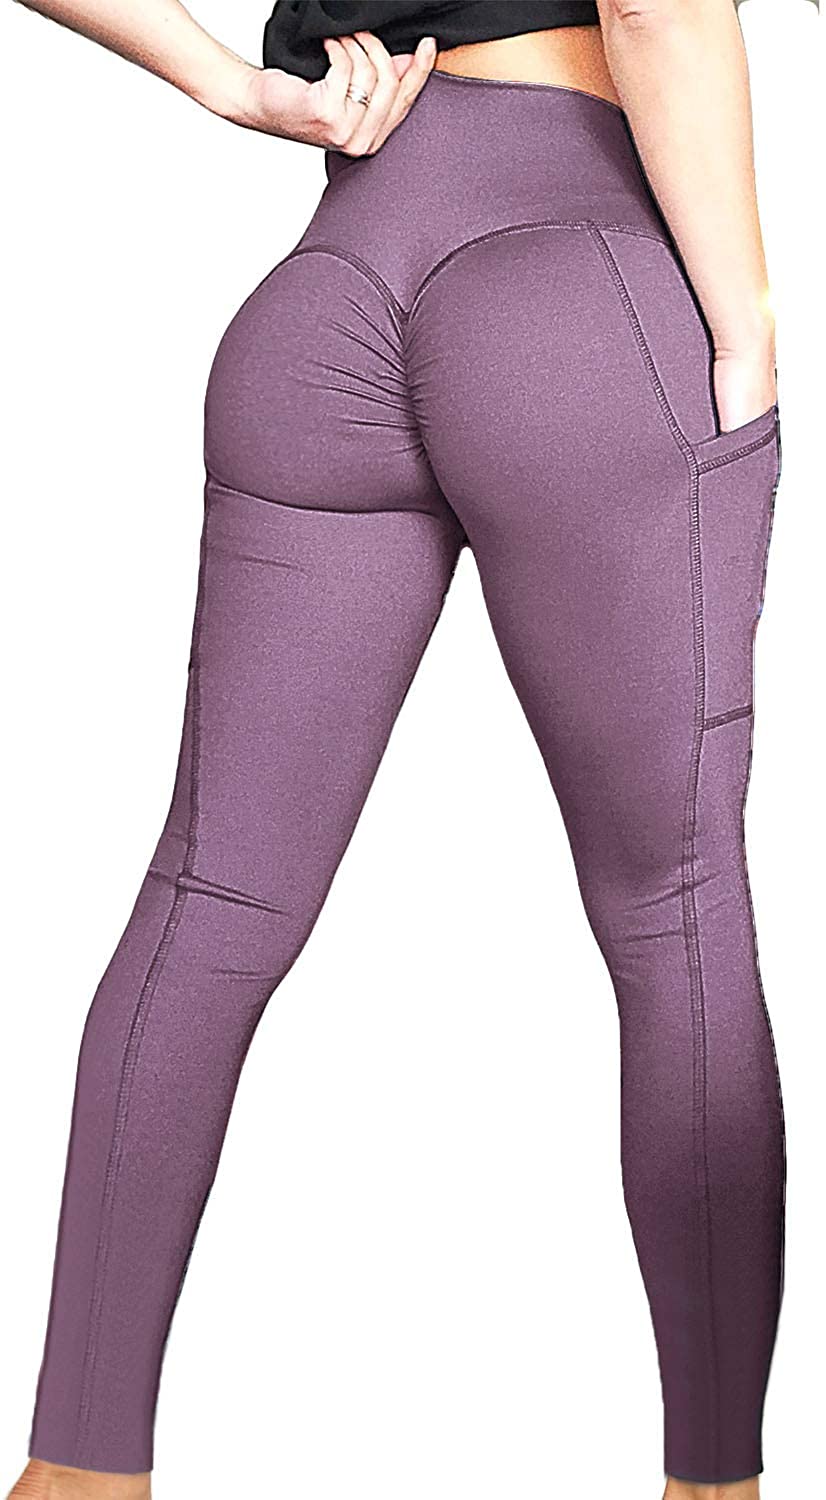 Buy FITTOO Women Butt Lift Ruched Sport Workout Sexy High Waist Tight  Leggings online